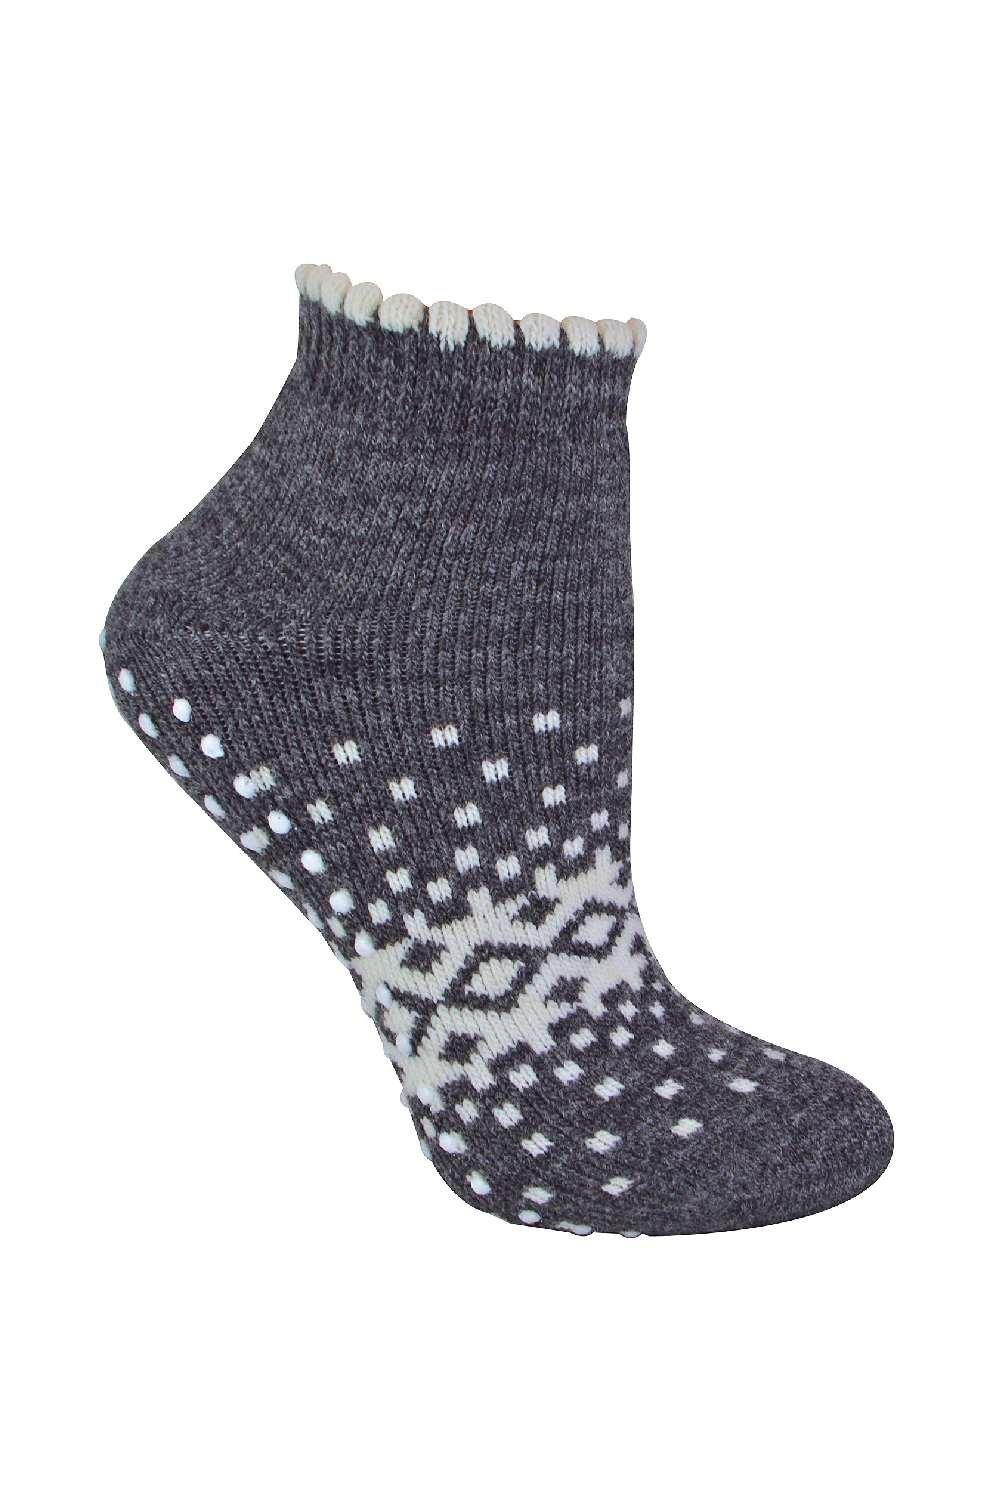 Thermal Low Cut Wool Non Slip Ankle Slipper Socks